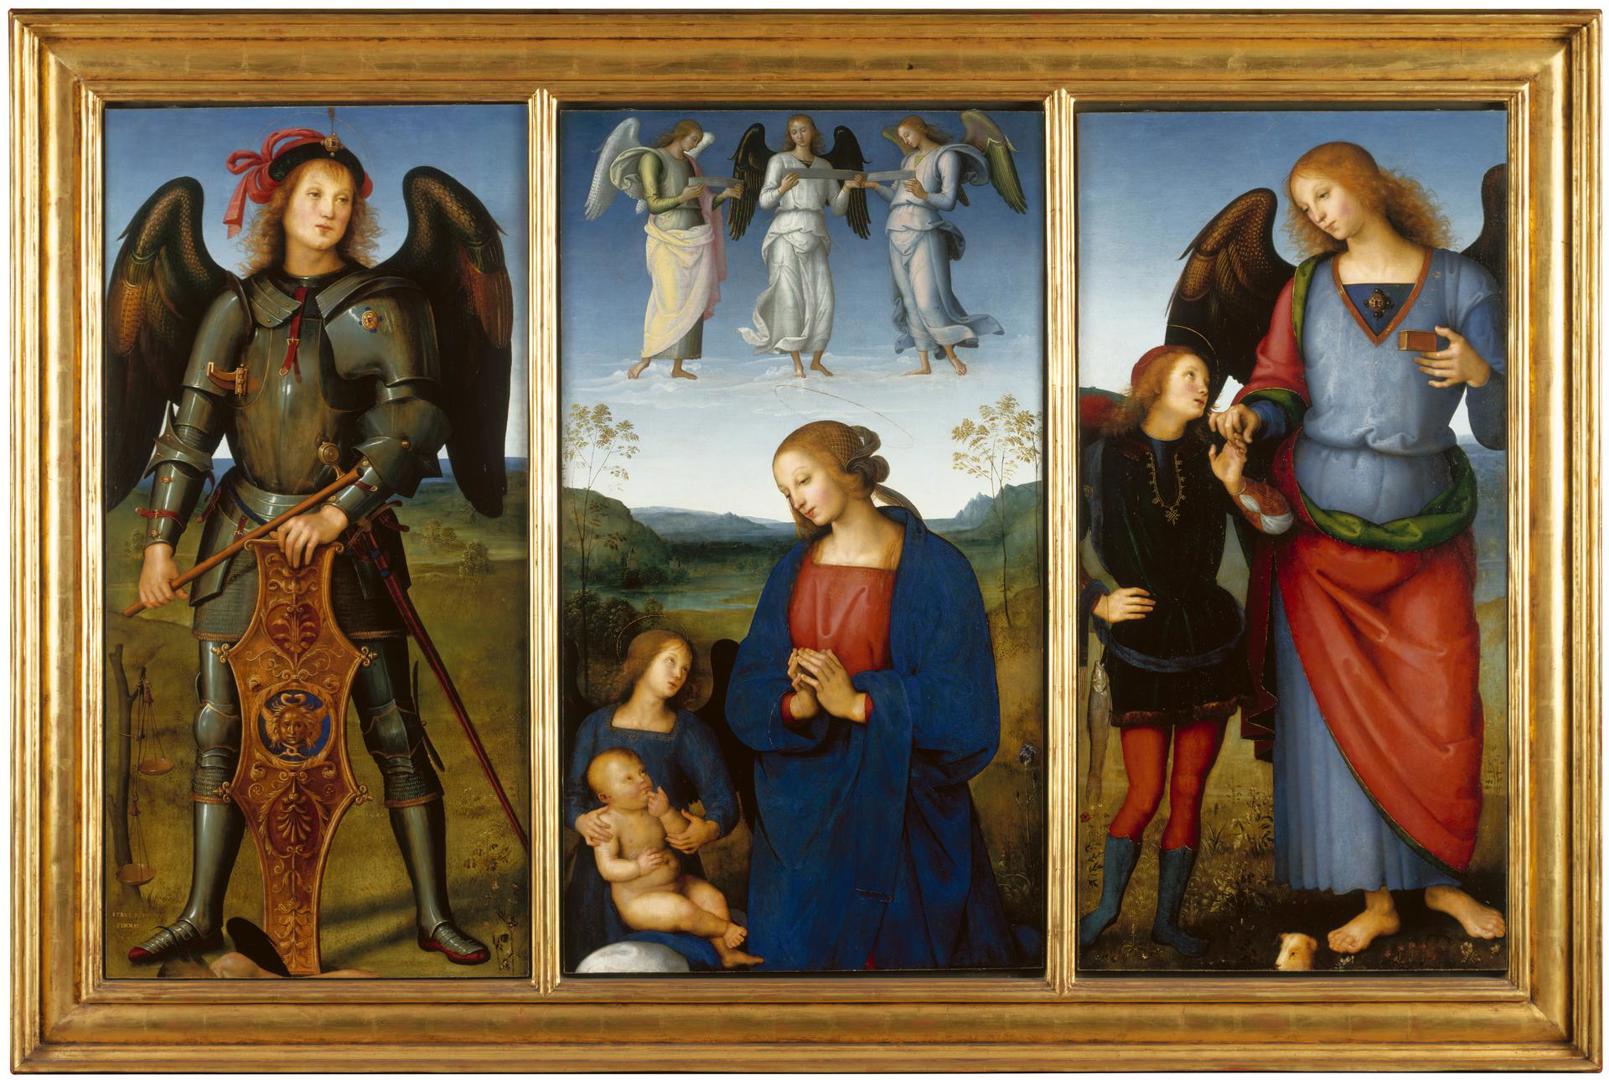 Three Panels from an Altarpiece, Certosa by Pietro Perugino